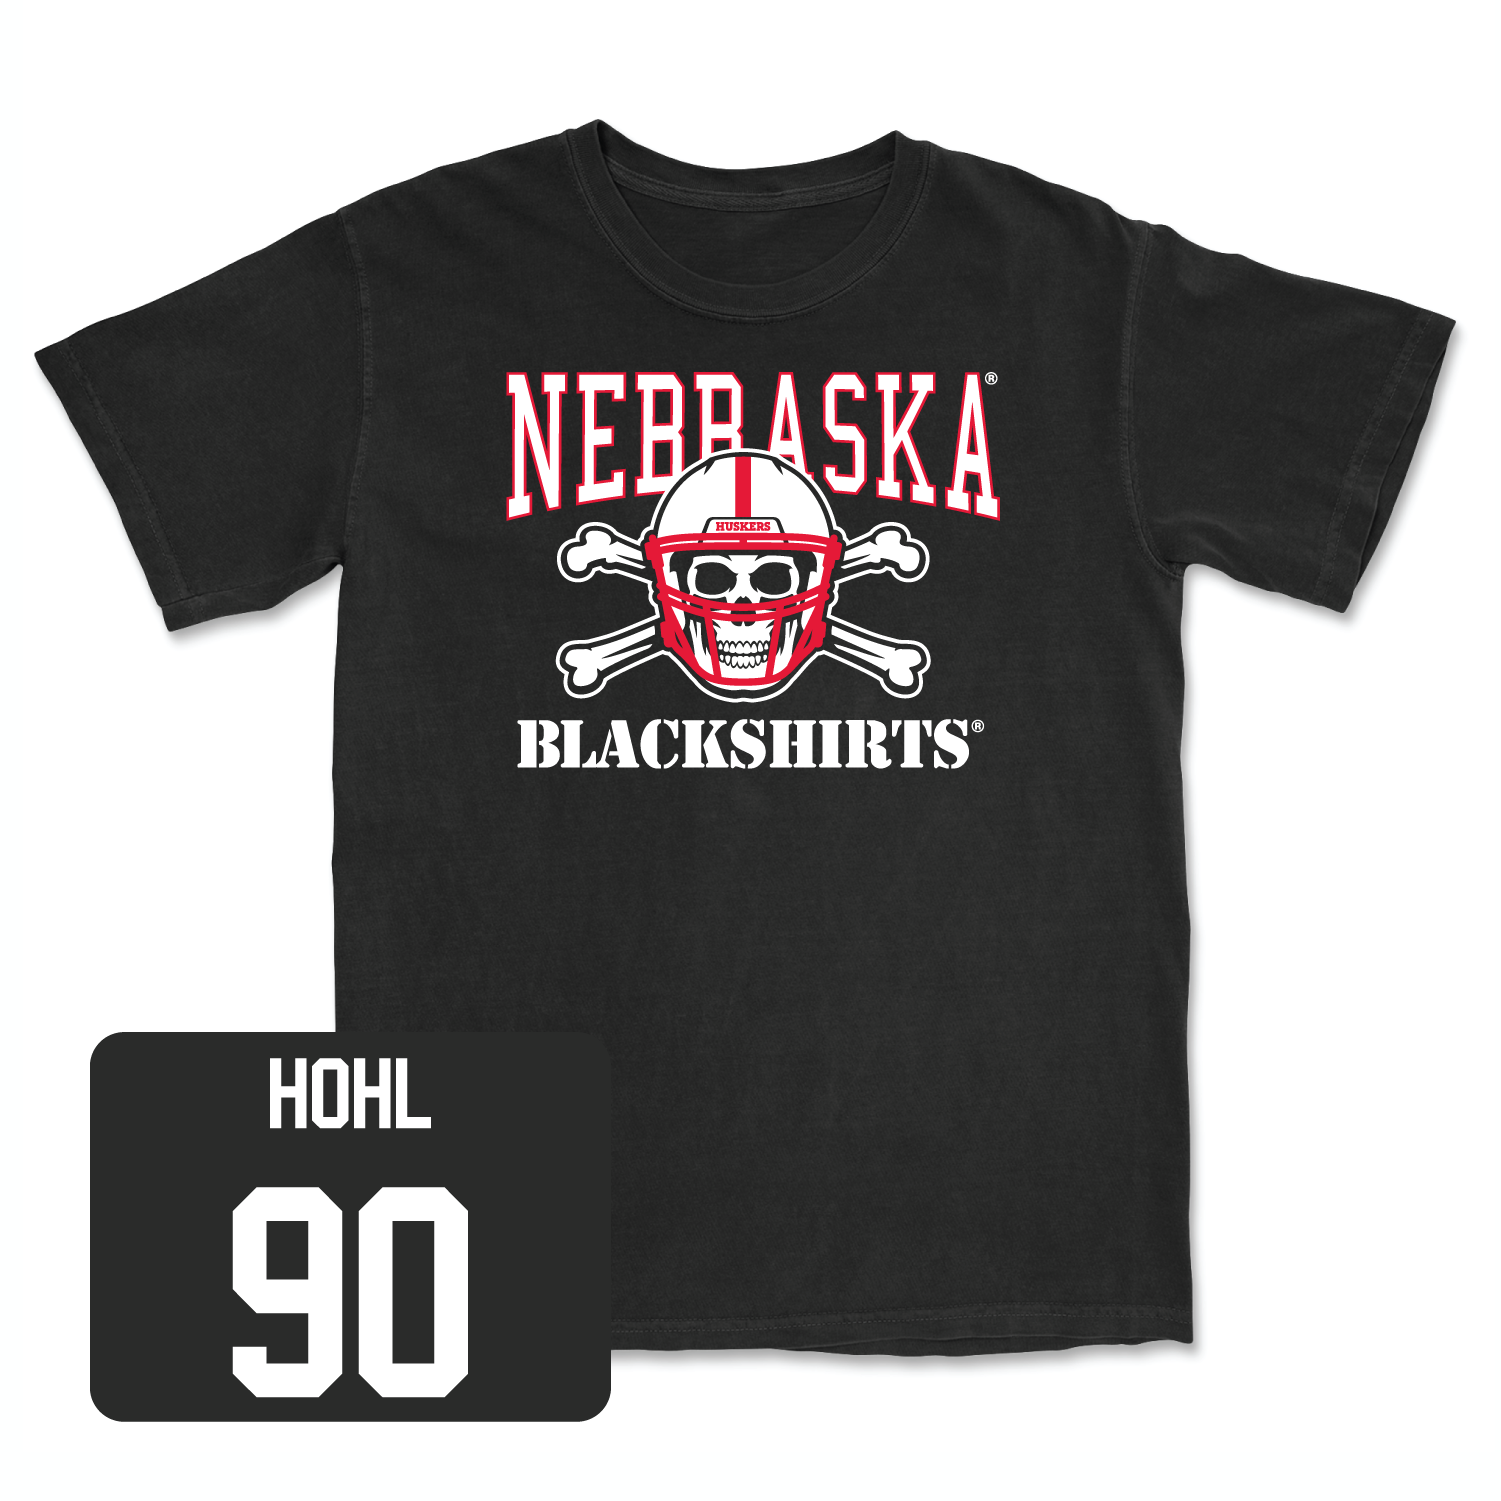 Black Football Blackshirts Tee X-Large / Jacob Hohl | #90